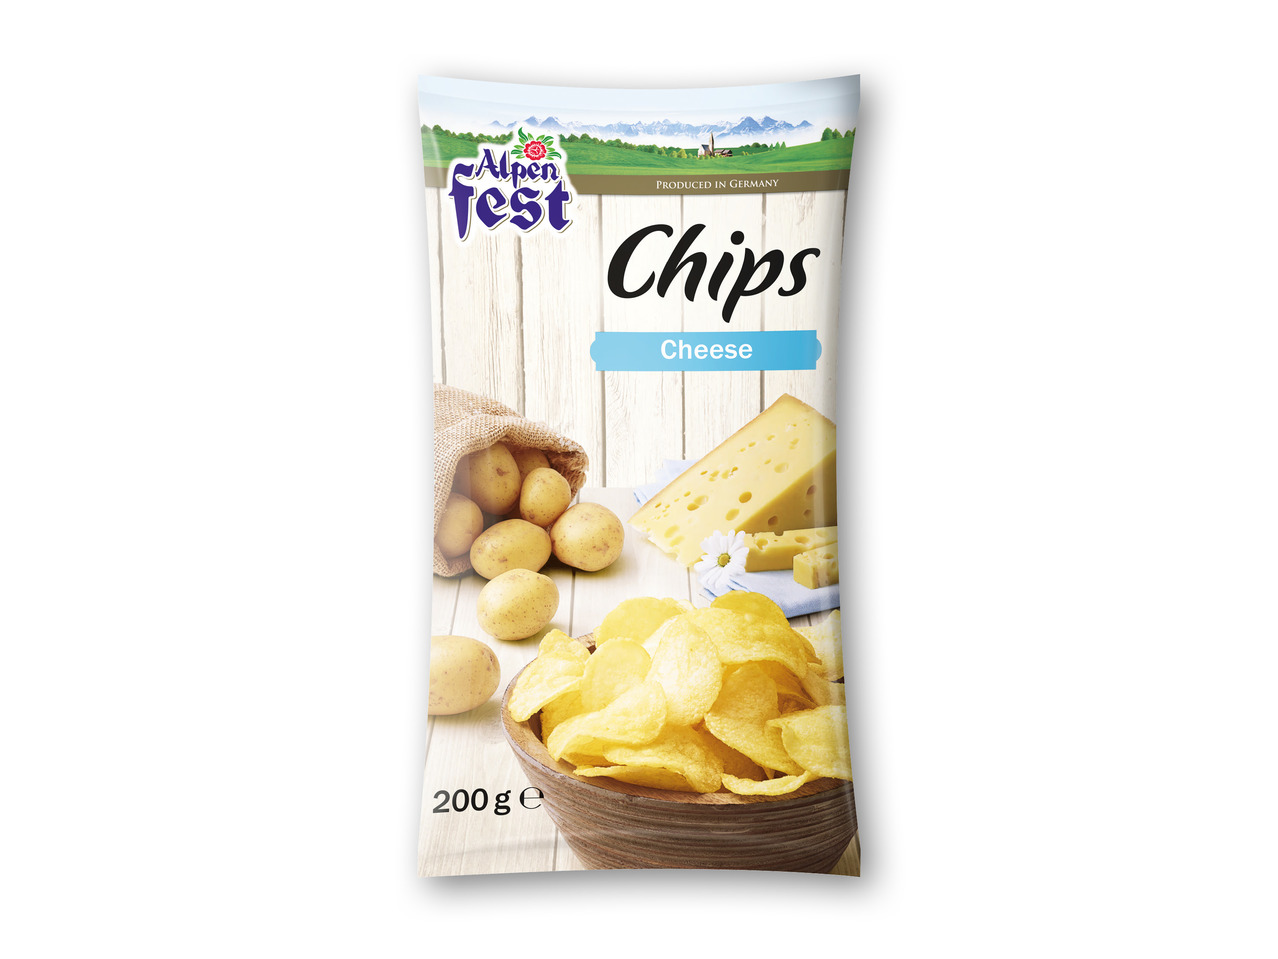 ALPENFEST Chips